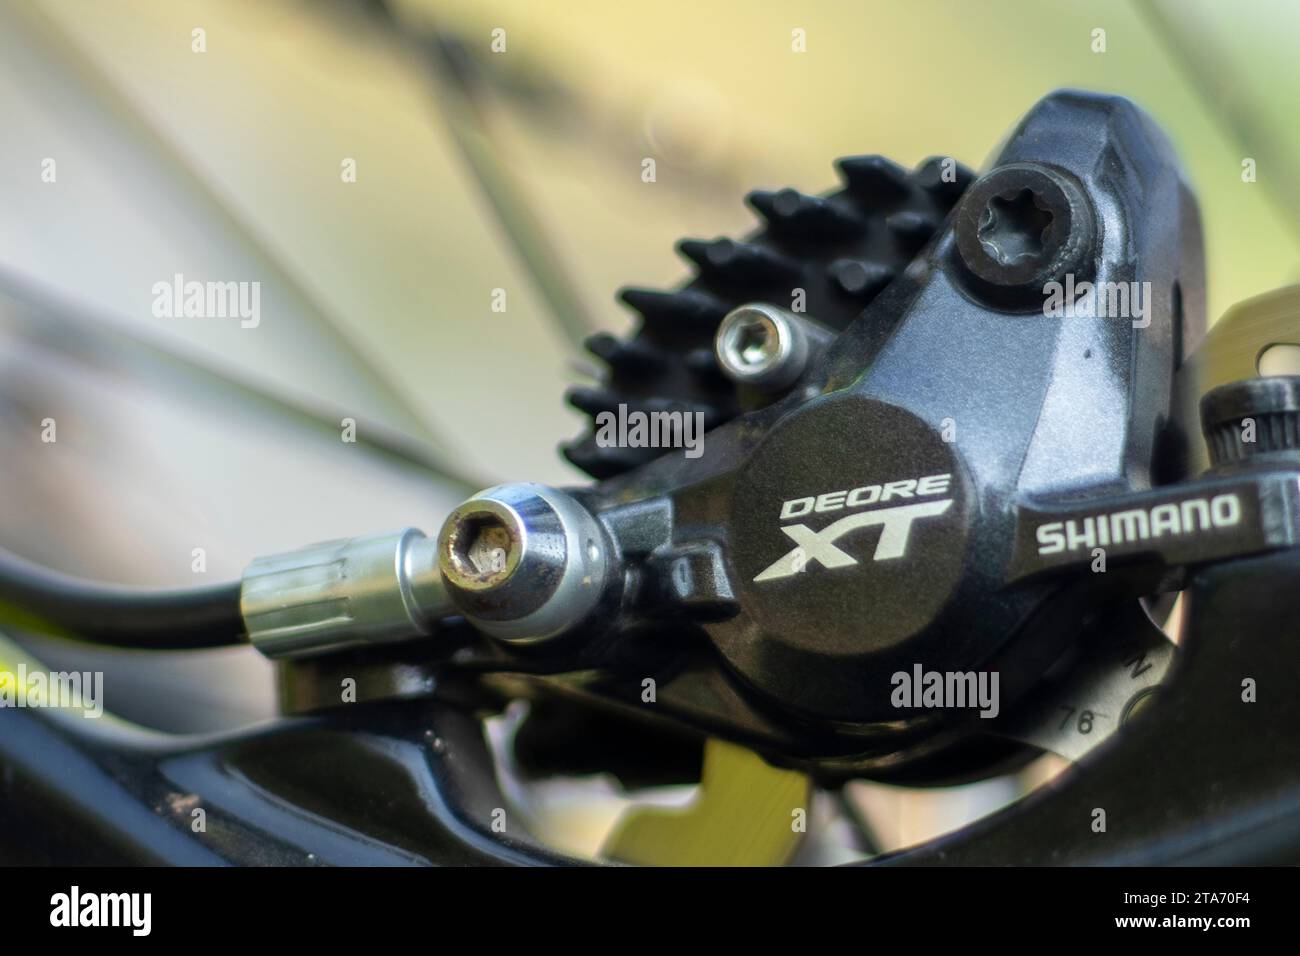 Shimano Mountain bike brake on blur background Stock Photo